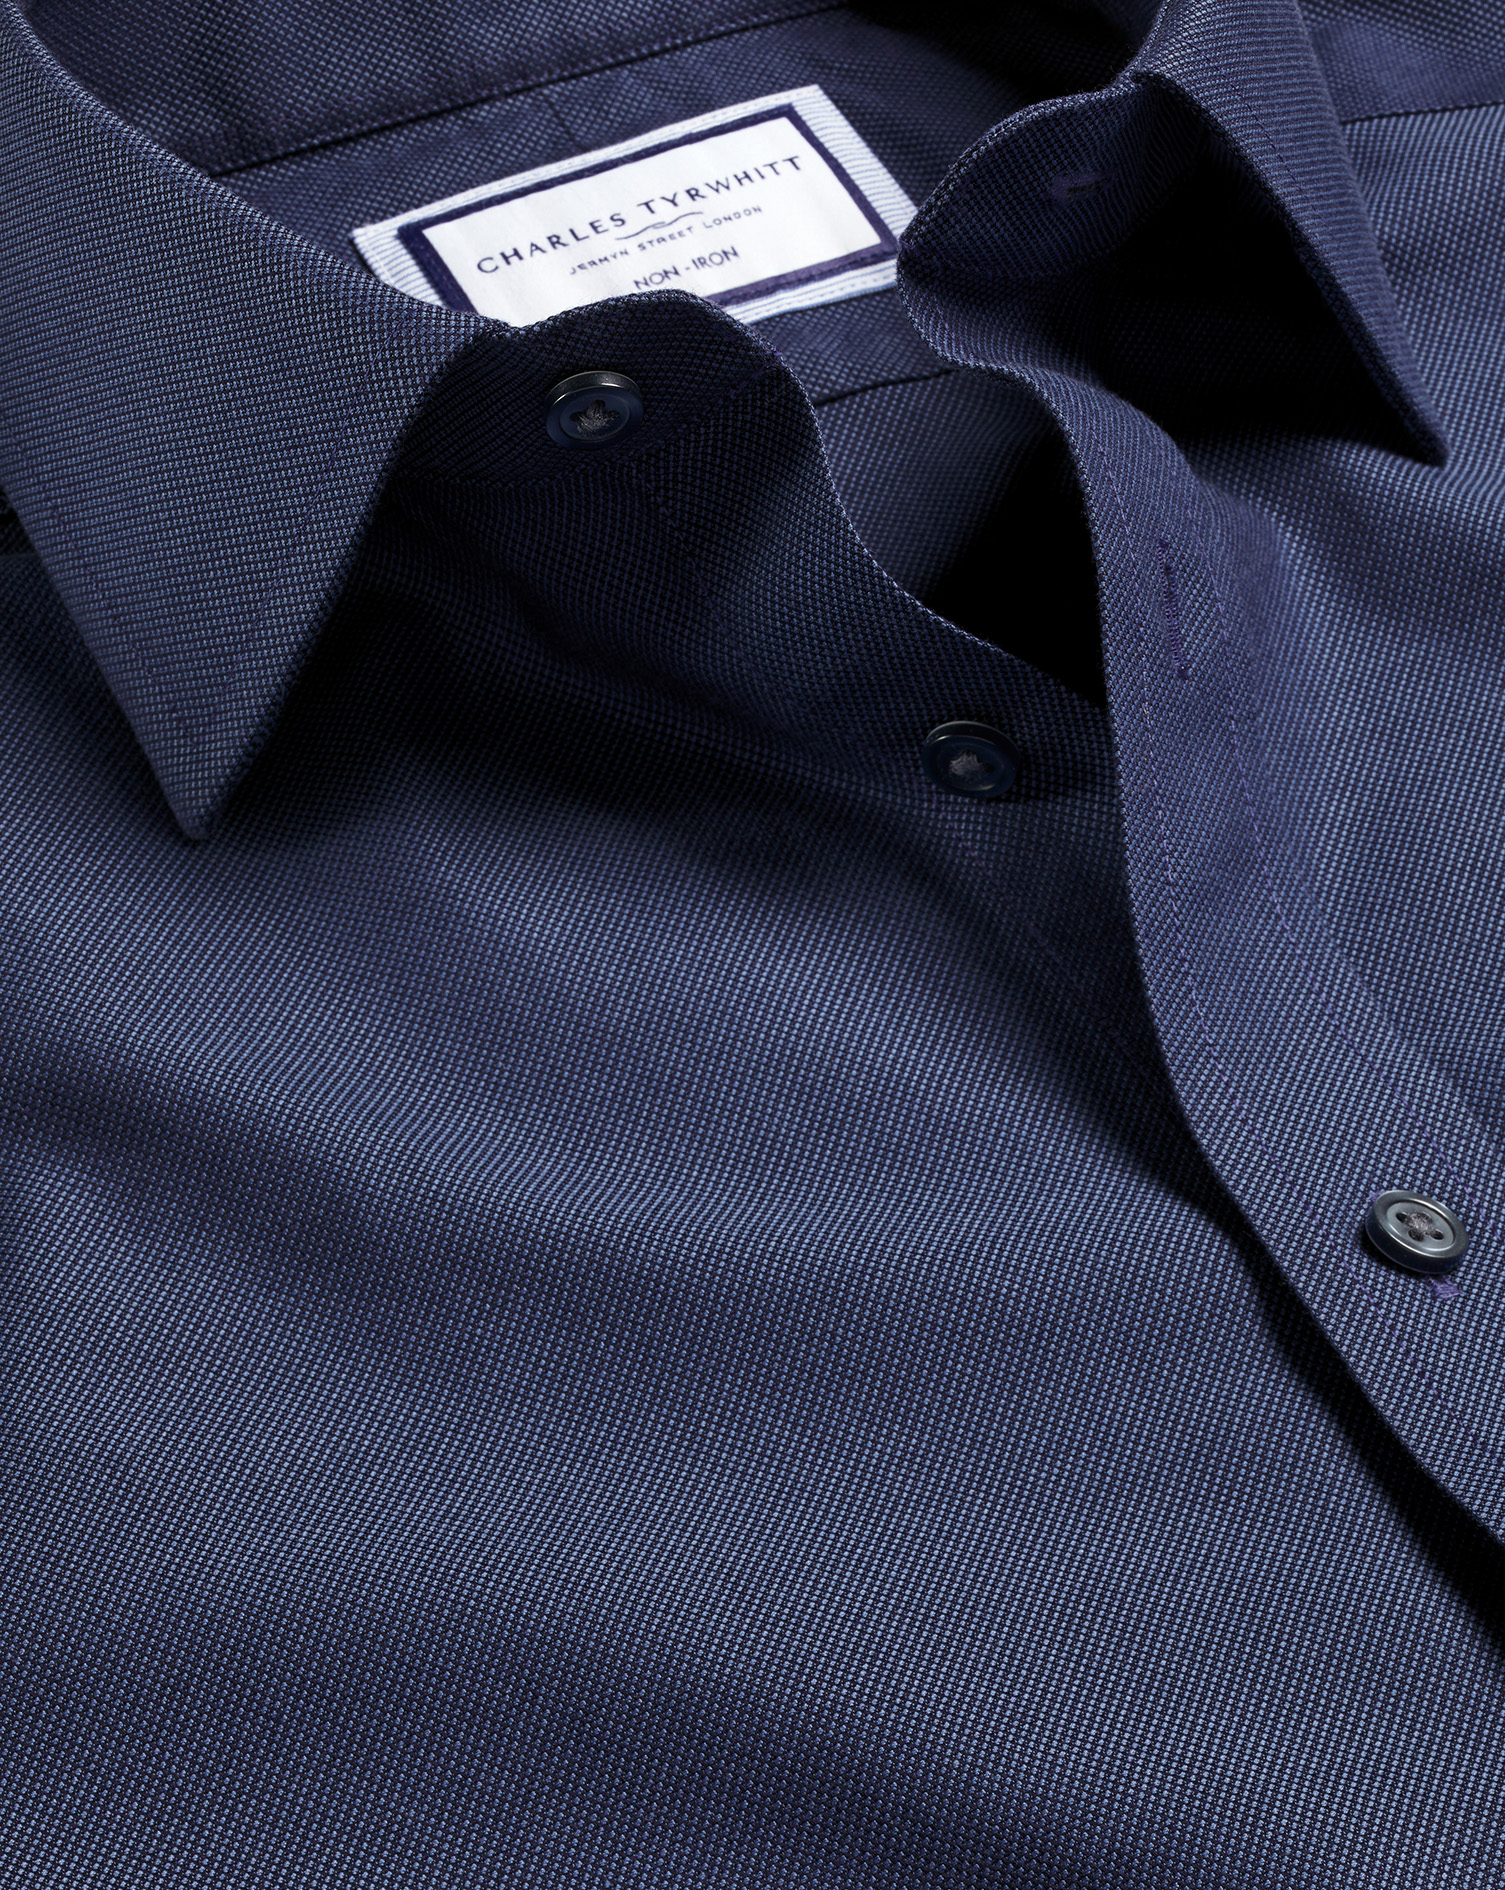 Men's Charles Tyrwhitt Non-Iron Royal Oxford Dress Shirt - French Blue Single Cuff Size 16/36 Cotton